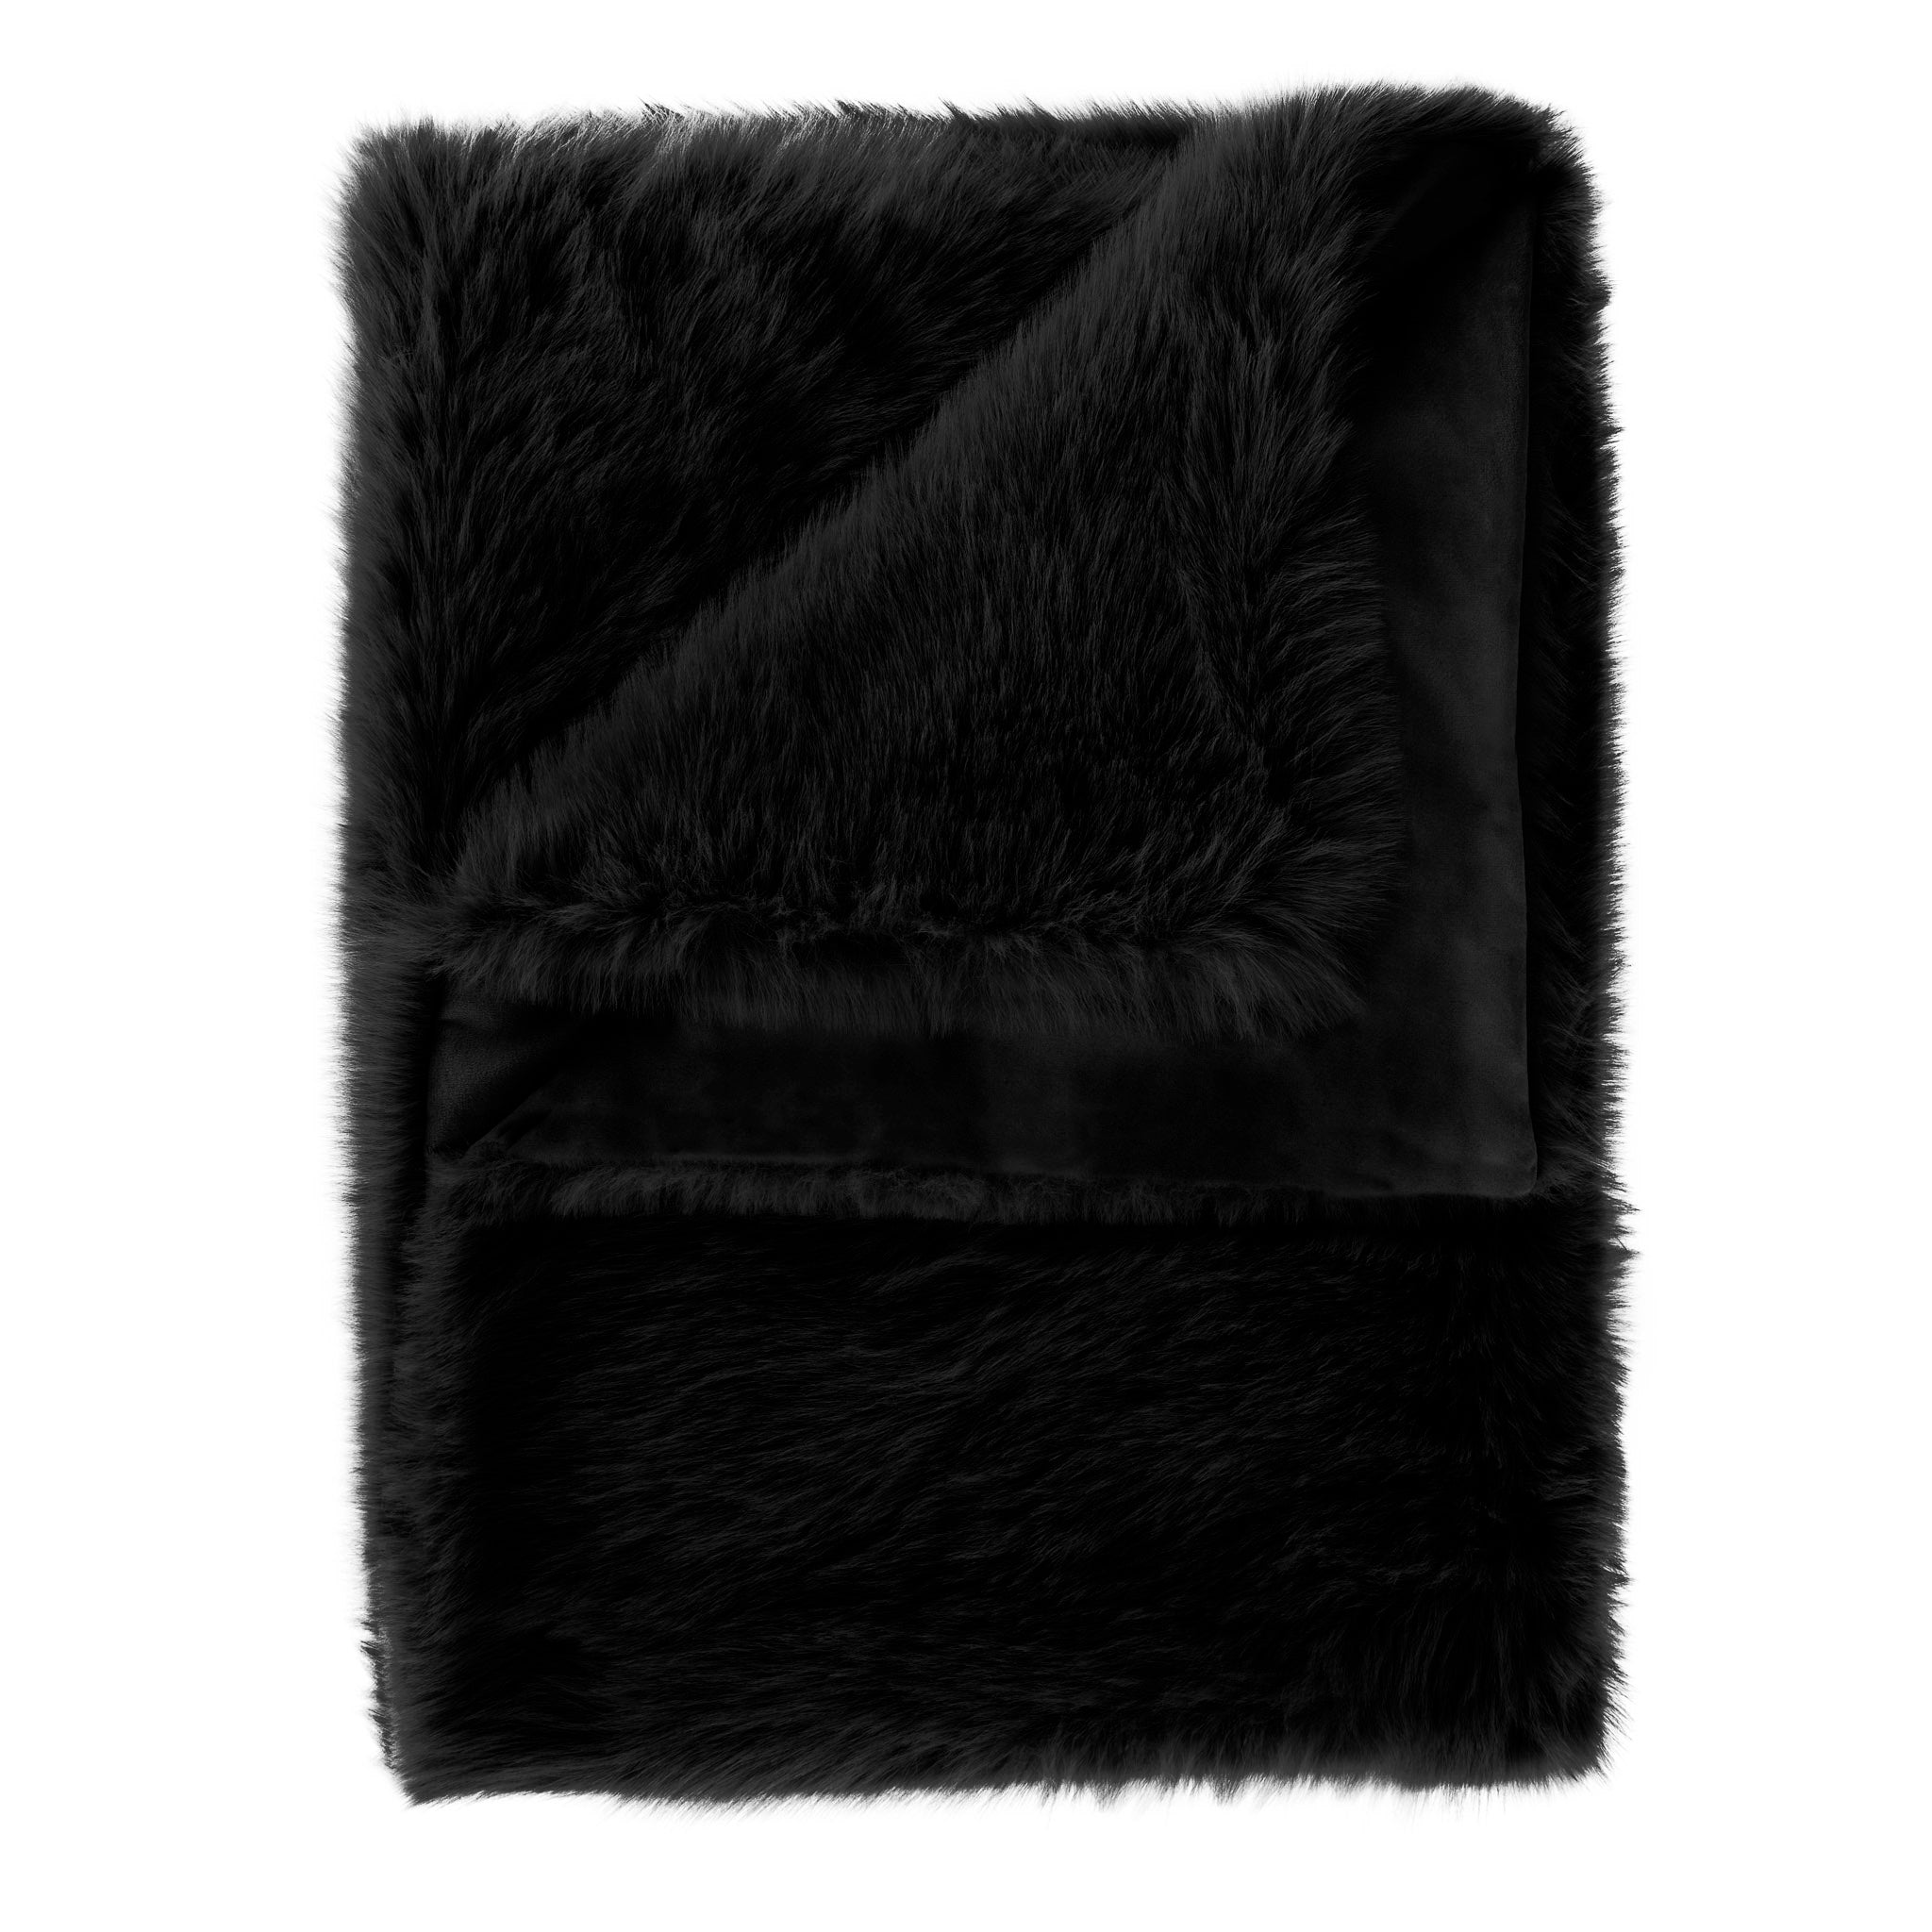 Plaid Perle Black is Black - Fake Fur